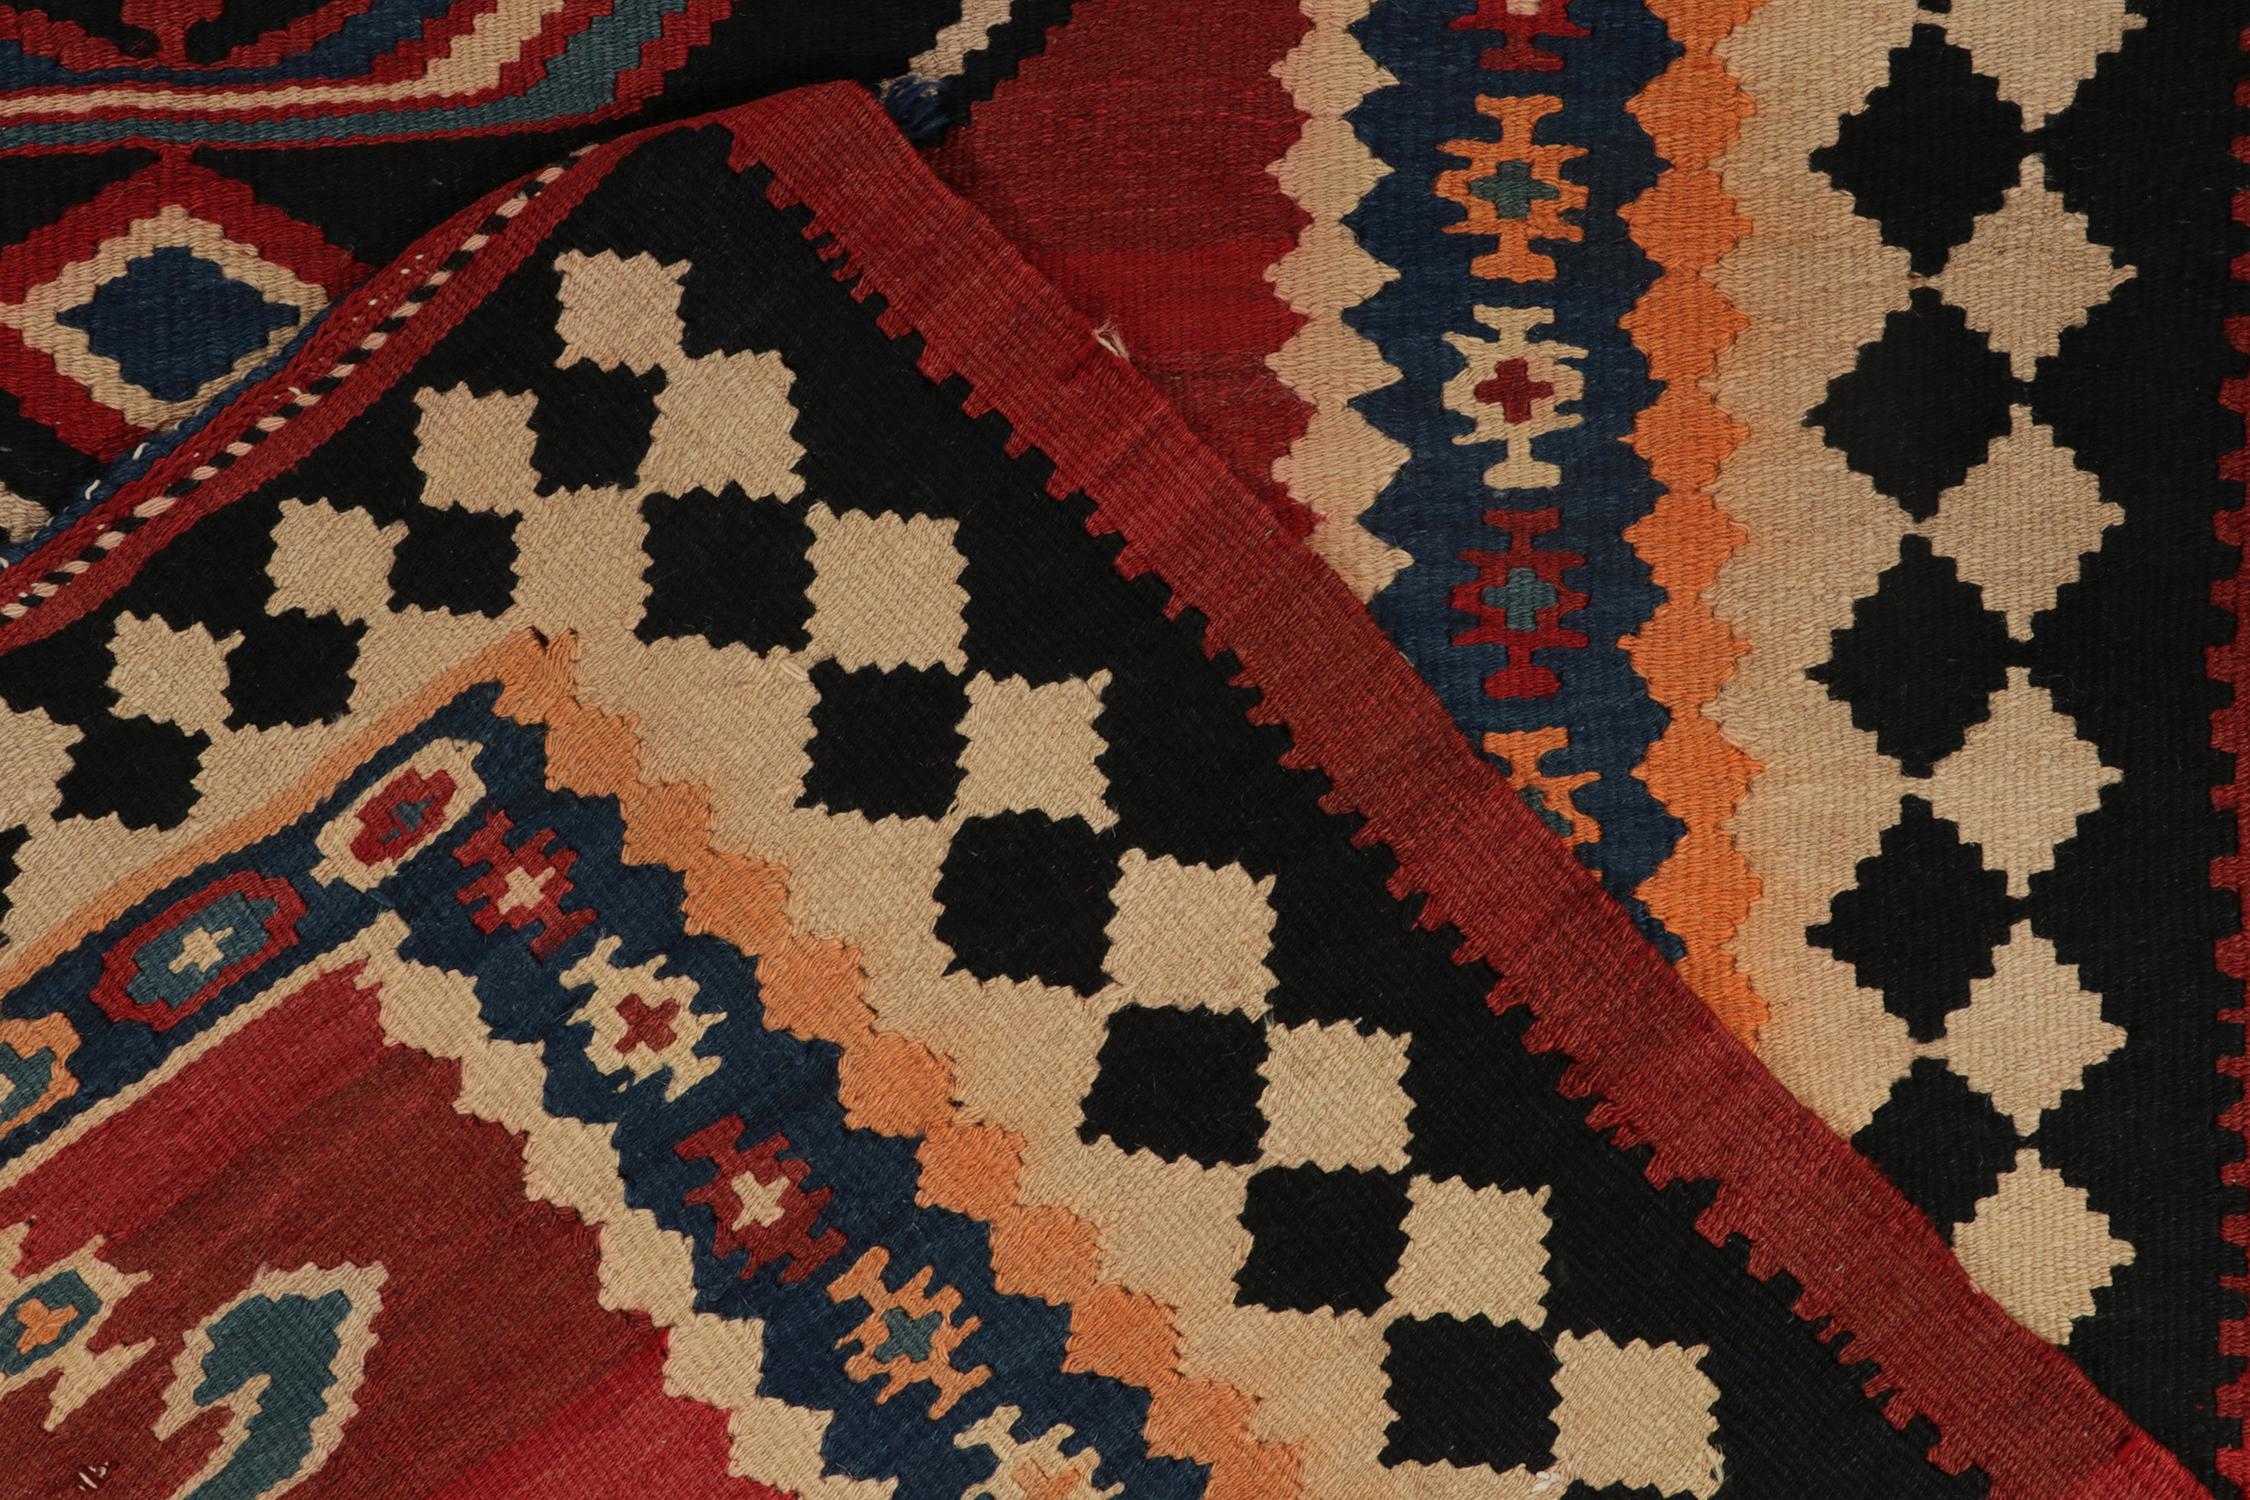 Persian Vintage Kurdish Kilim rug in Red Black and Blue Medallion Pattern by Rug & Kilim For Sale